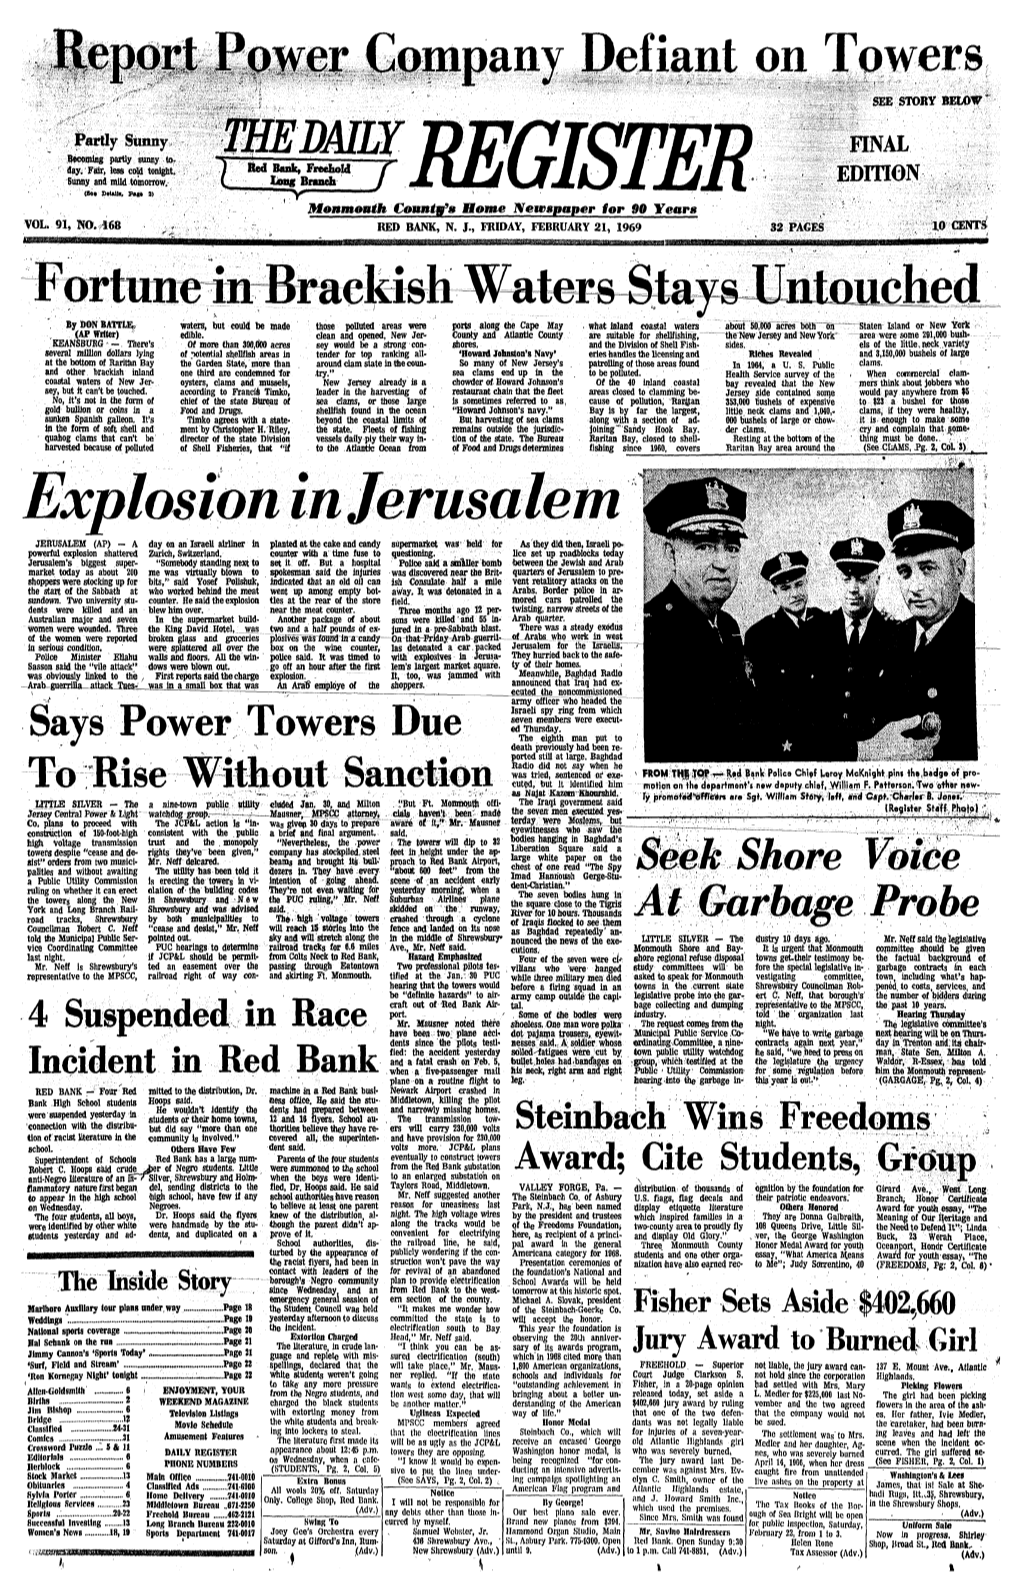 Explosion in Jerusalem